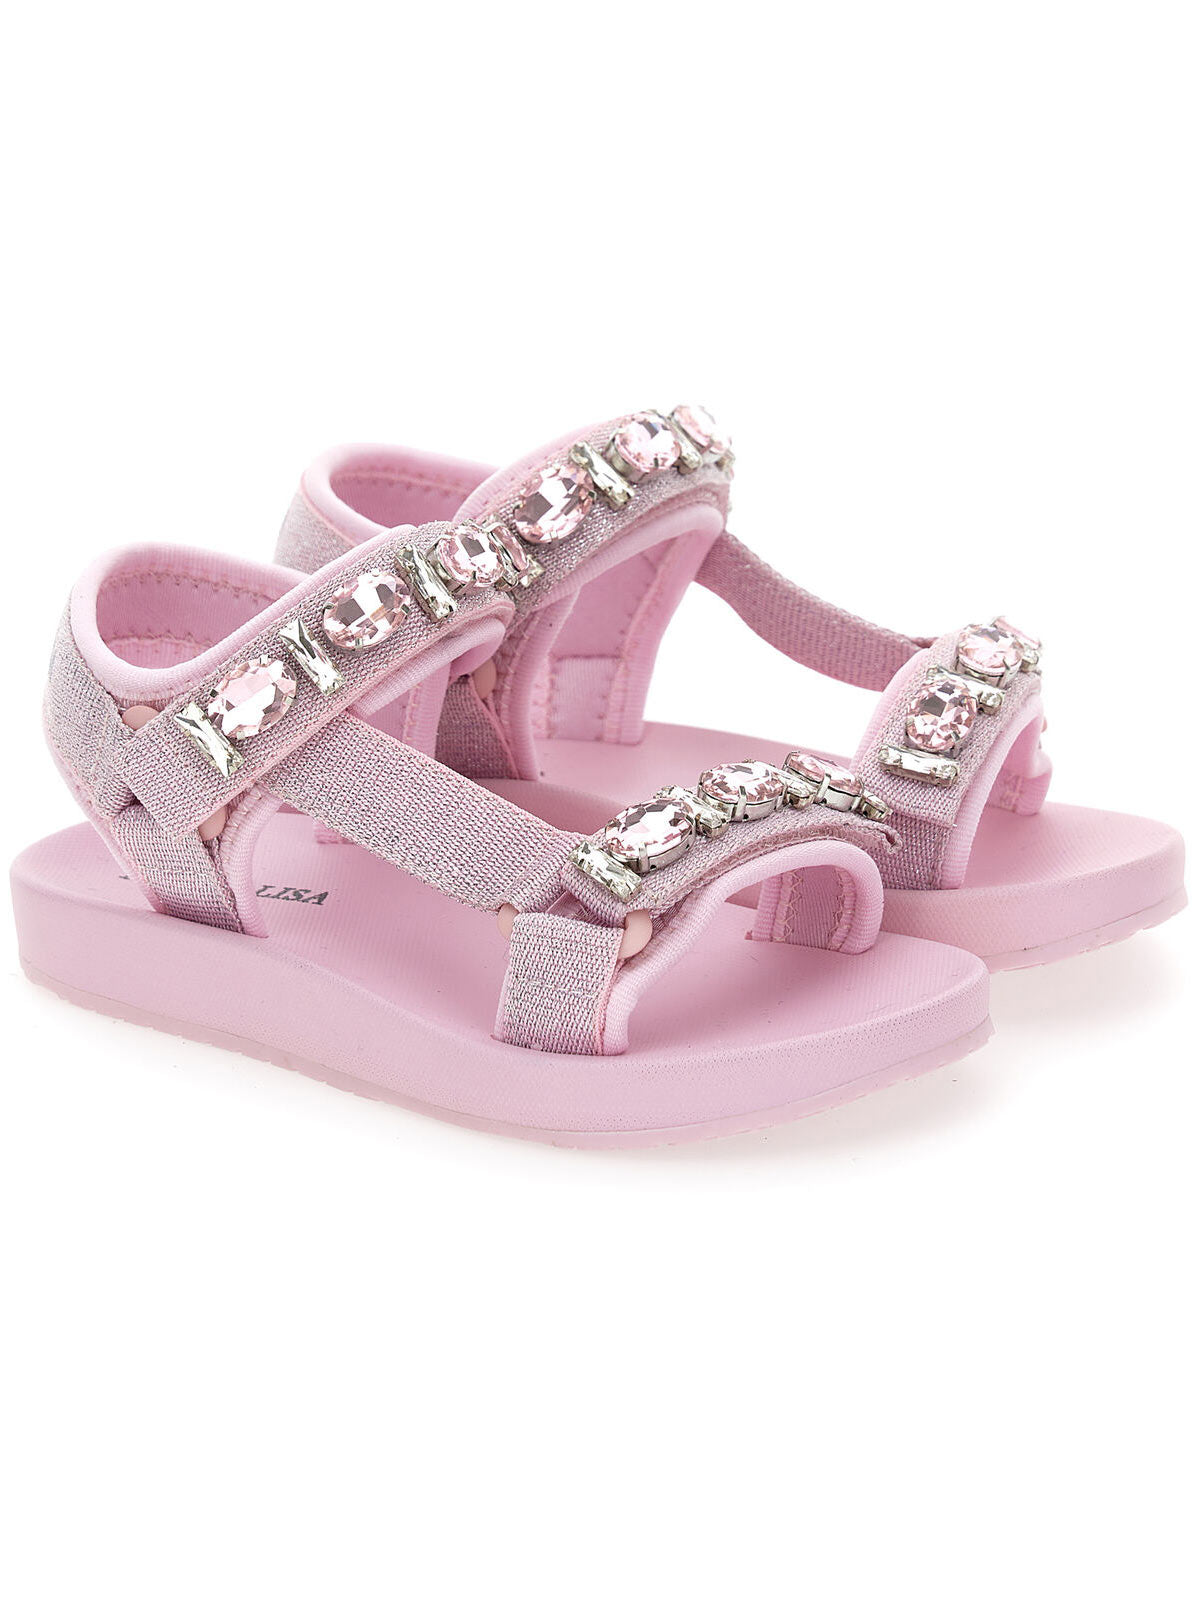 Monnalisa Hi-tech sandals with glam details-Pink